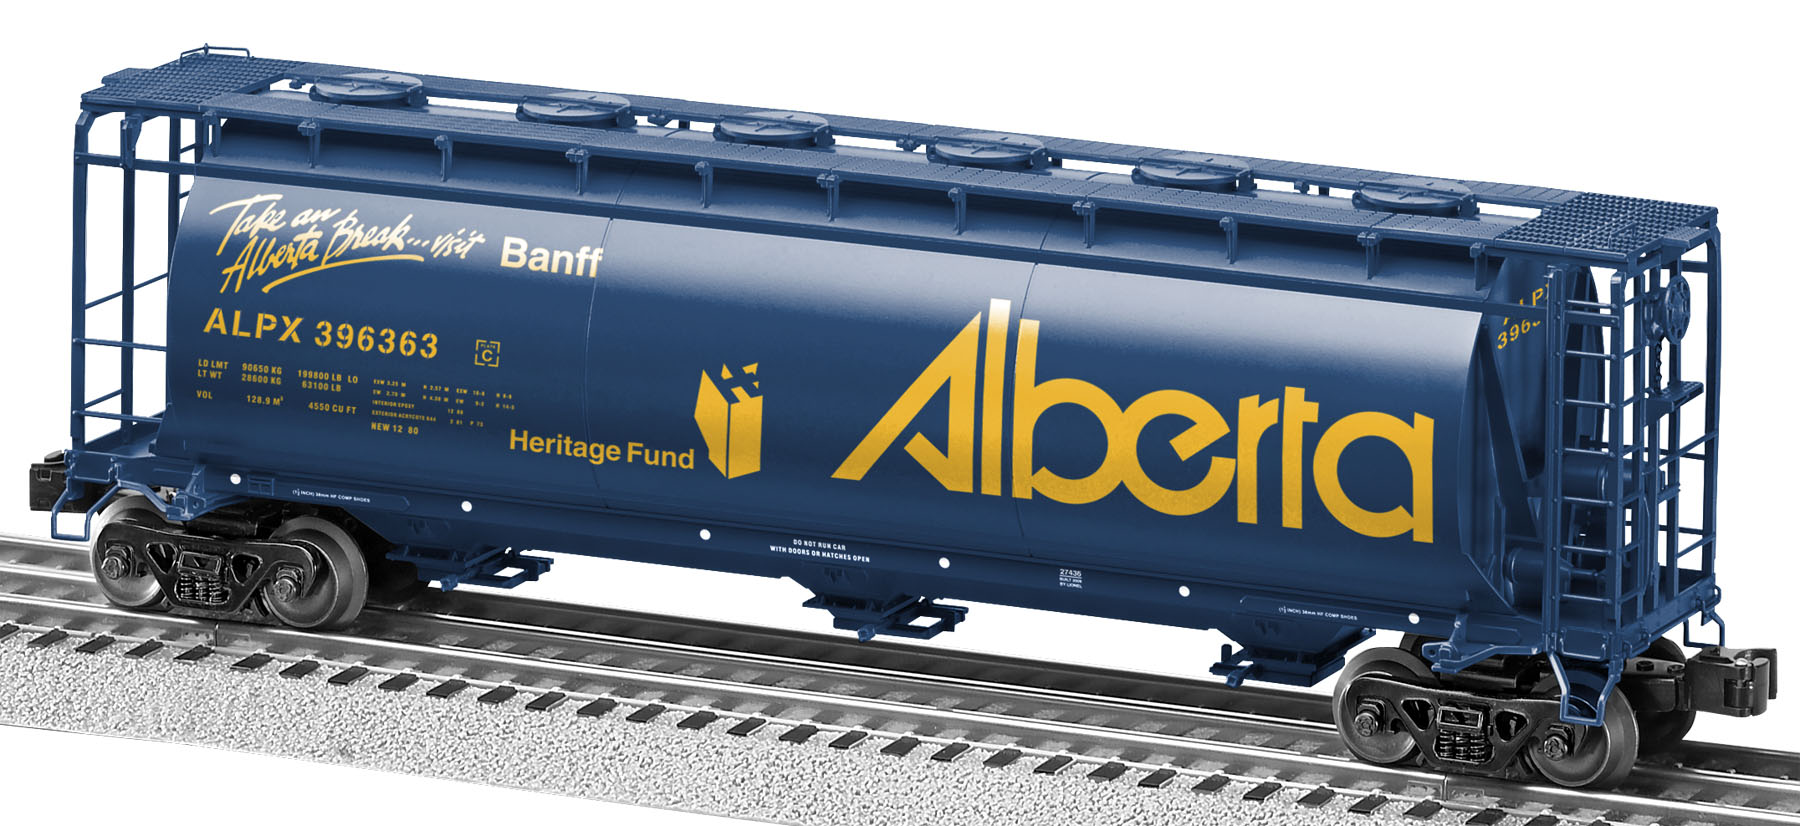 Alberta 3-Bay Cylindrical Hopper – Banff image